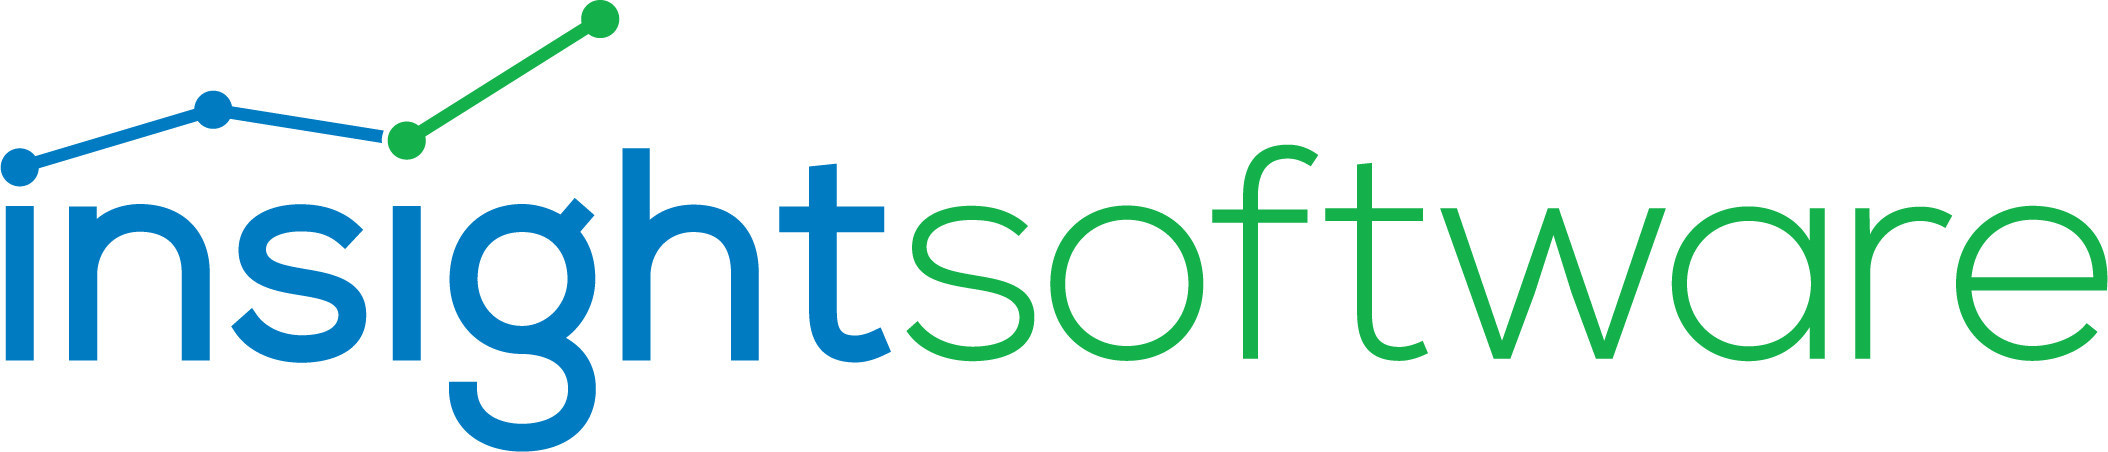 Logo of insightssoftware software